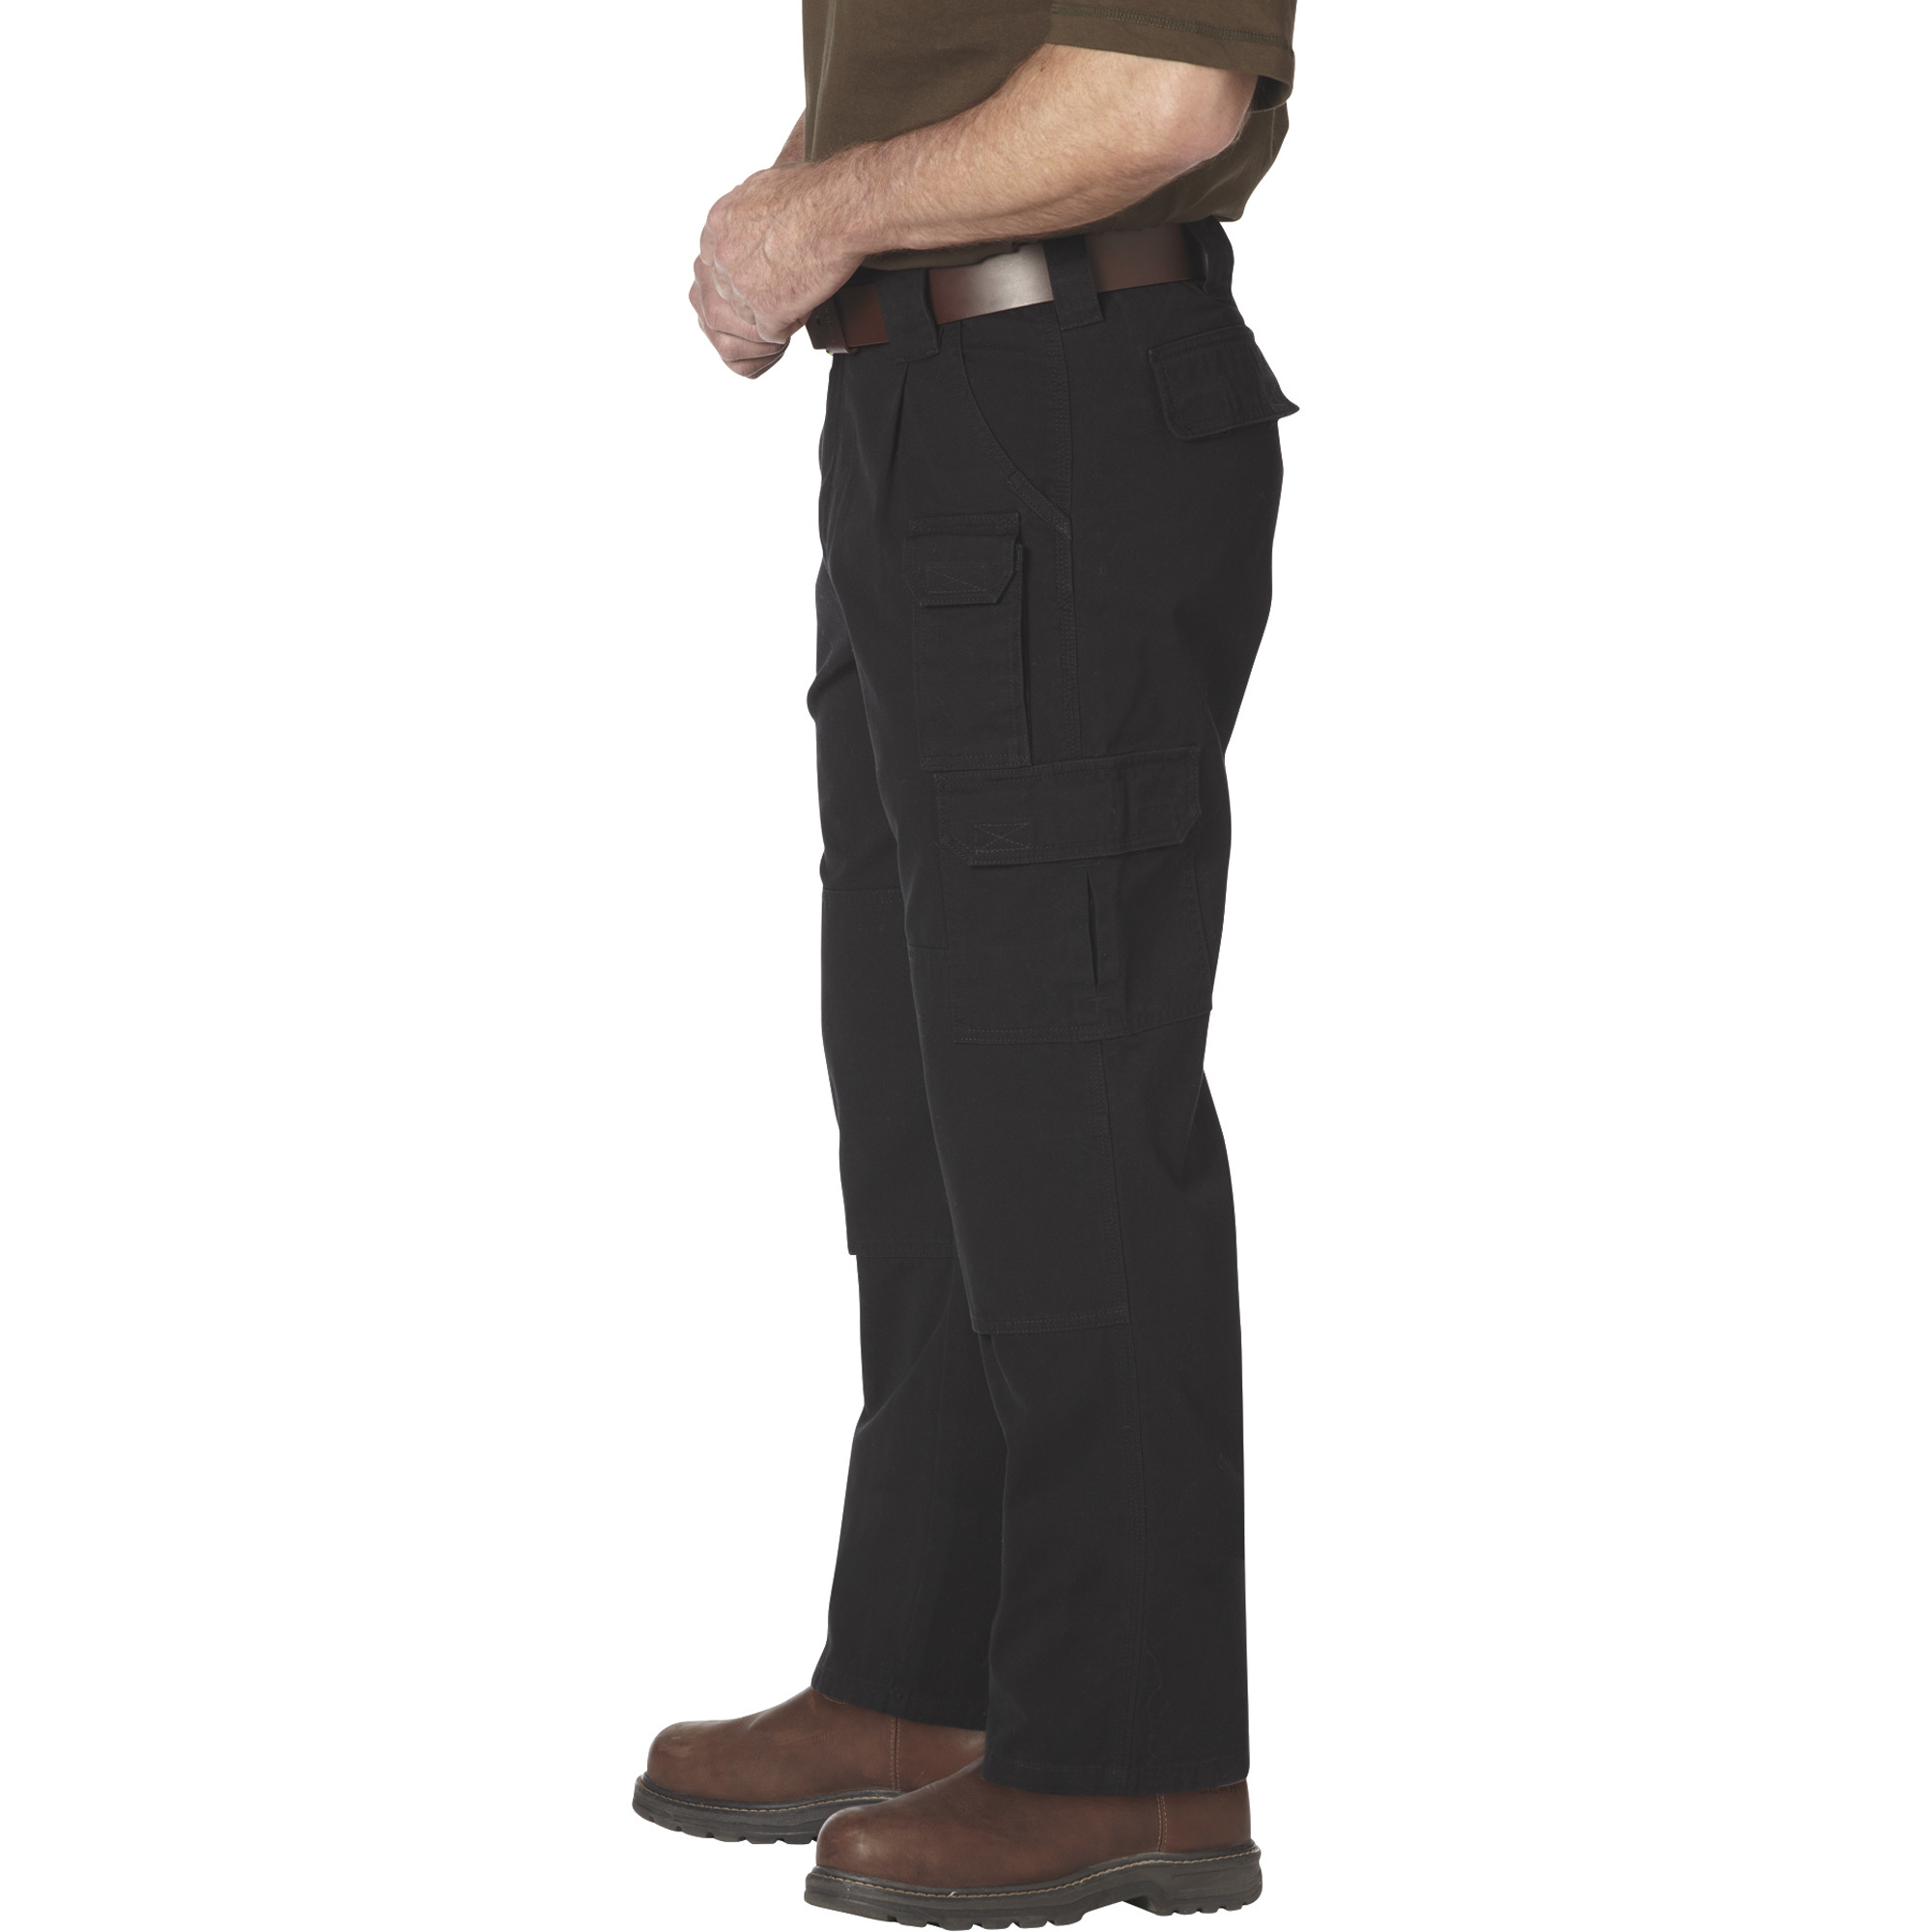 Gravel Gear Men's 7-Pocket Tactical Pants with Teflon - Black, 44Inch Waist x 32Inch Inseam